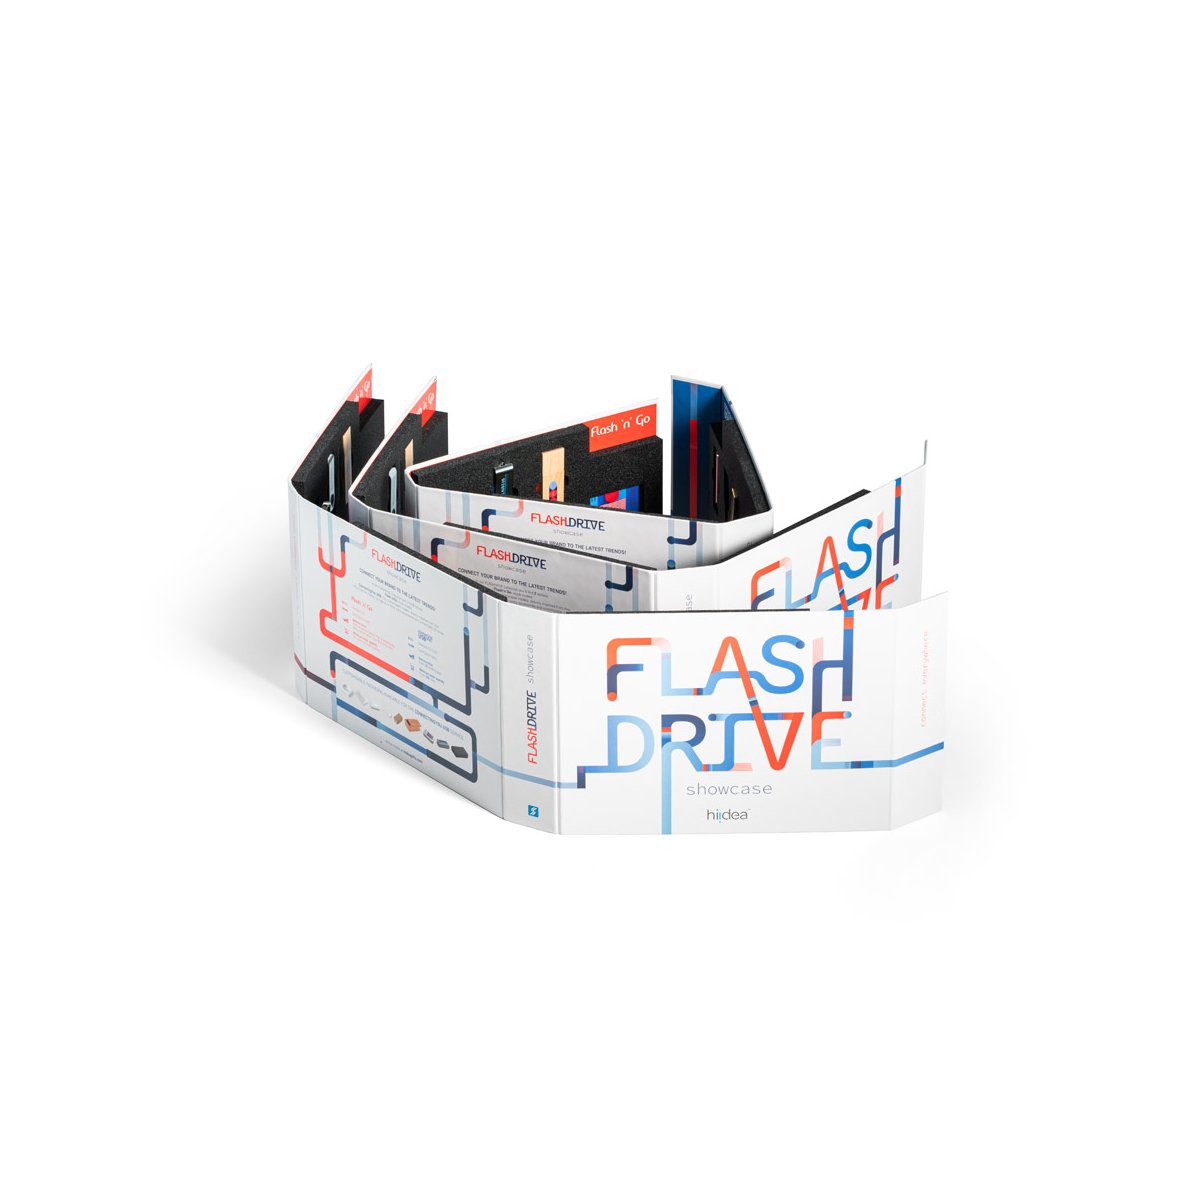 FLASH DRIVE SHOWCASE Wzornik personalizowanych pendrive'ów